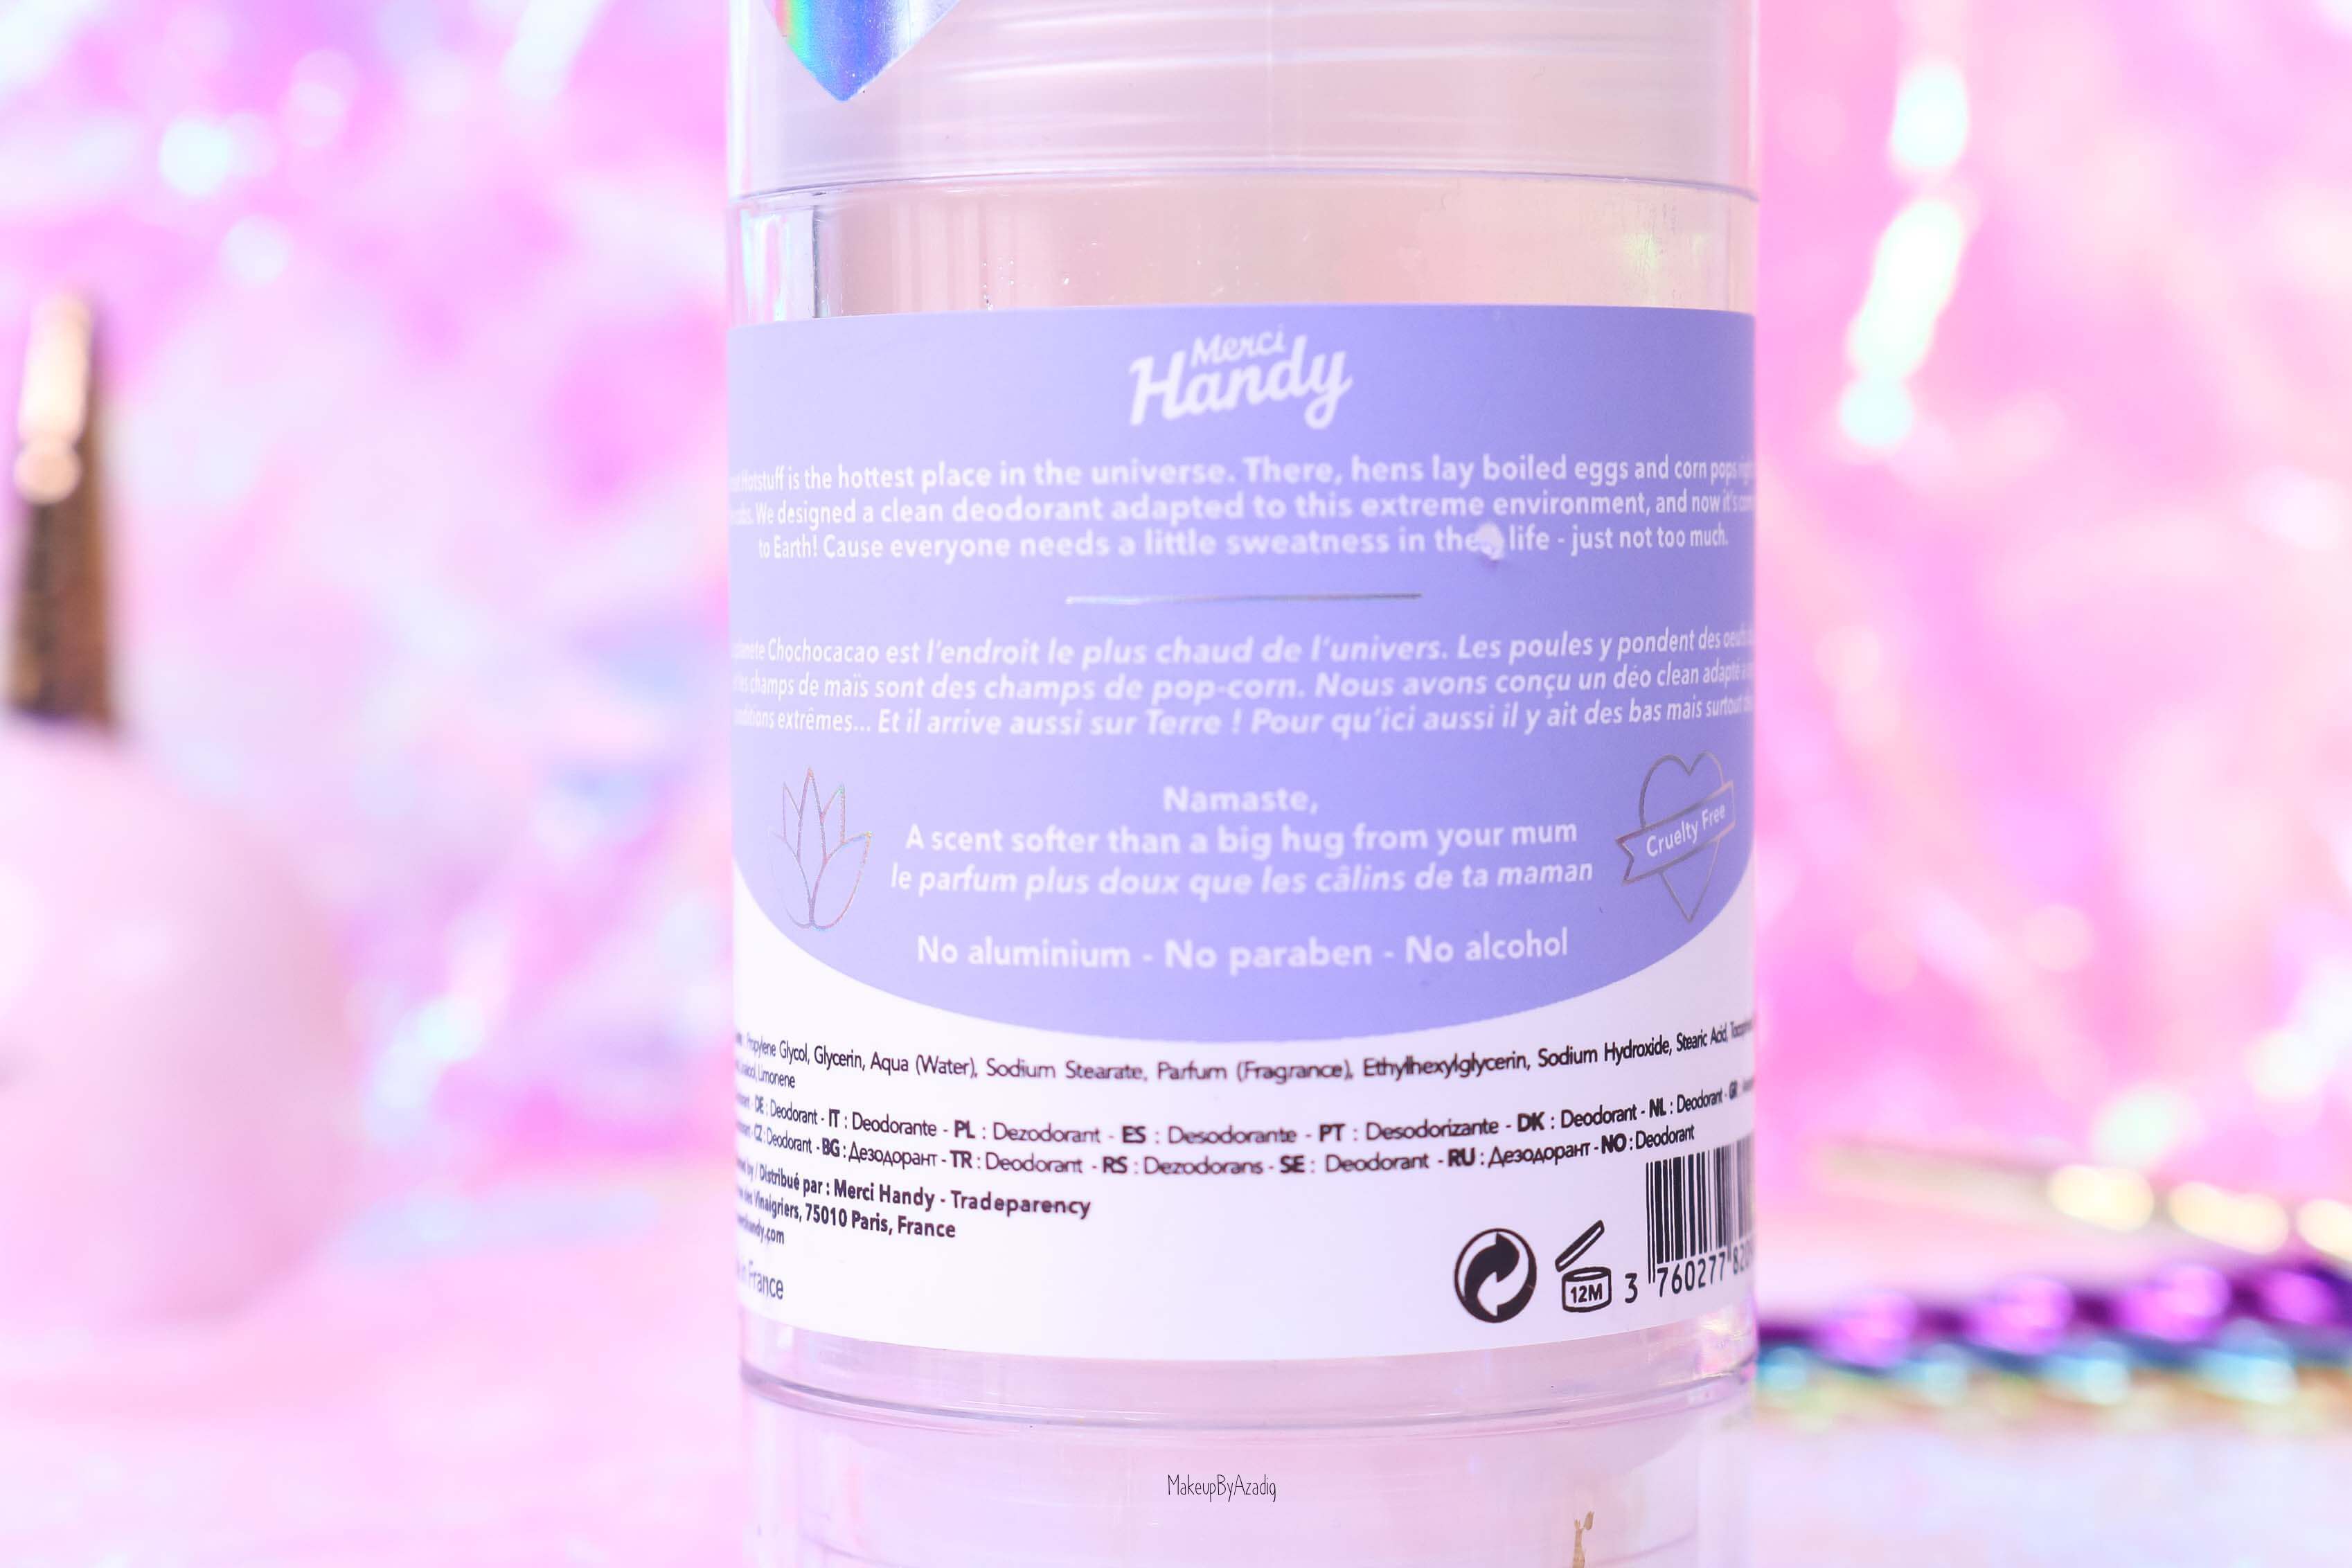 revue-clean-deodorant-merci-handy-namaste-flower-power-sans-aluminium-cruelty-free-avis-prix-makeupbyazadig-sephora-efficacite-violet